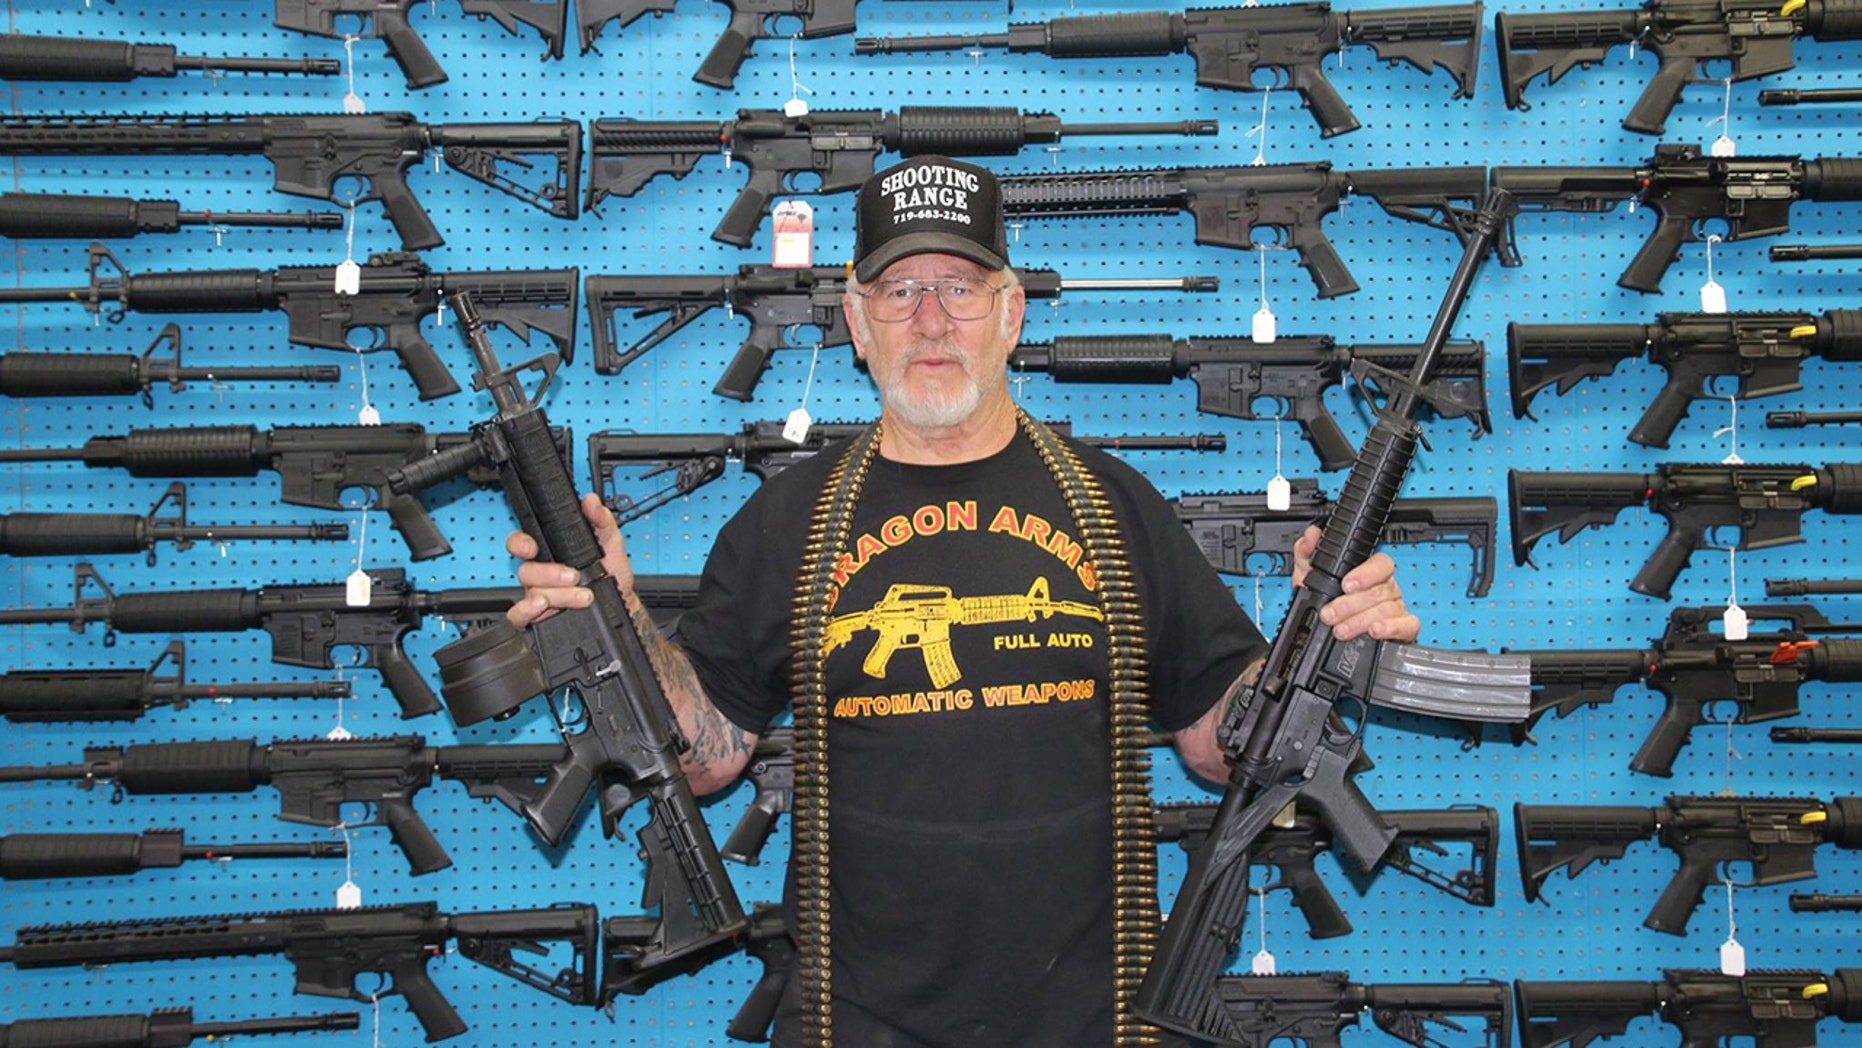 Mel Bernstein, owner of the Dragon Arms gun store in Colorado Springs, Colorado. 